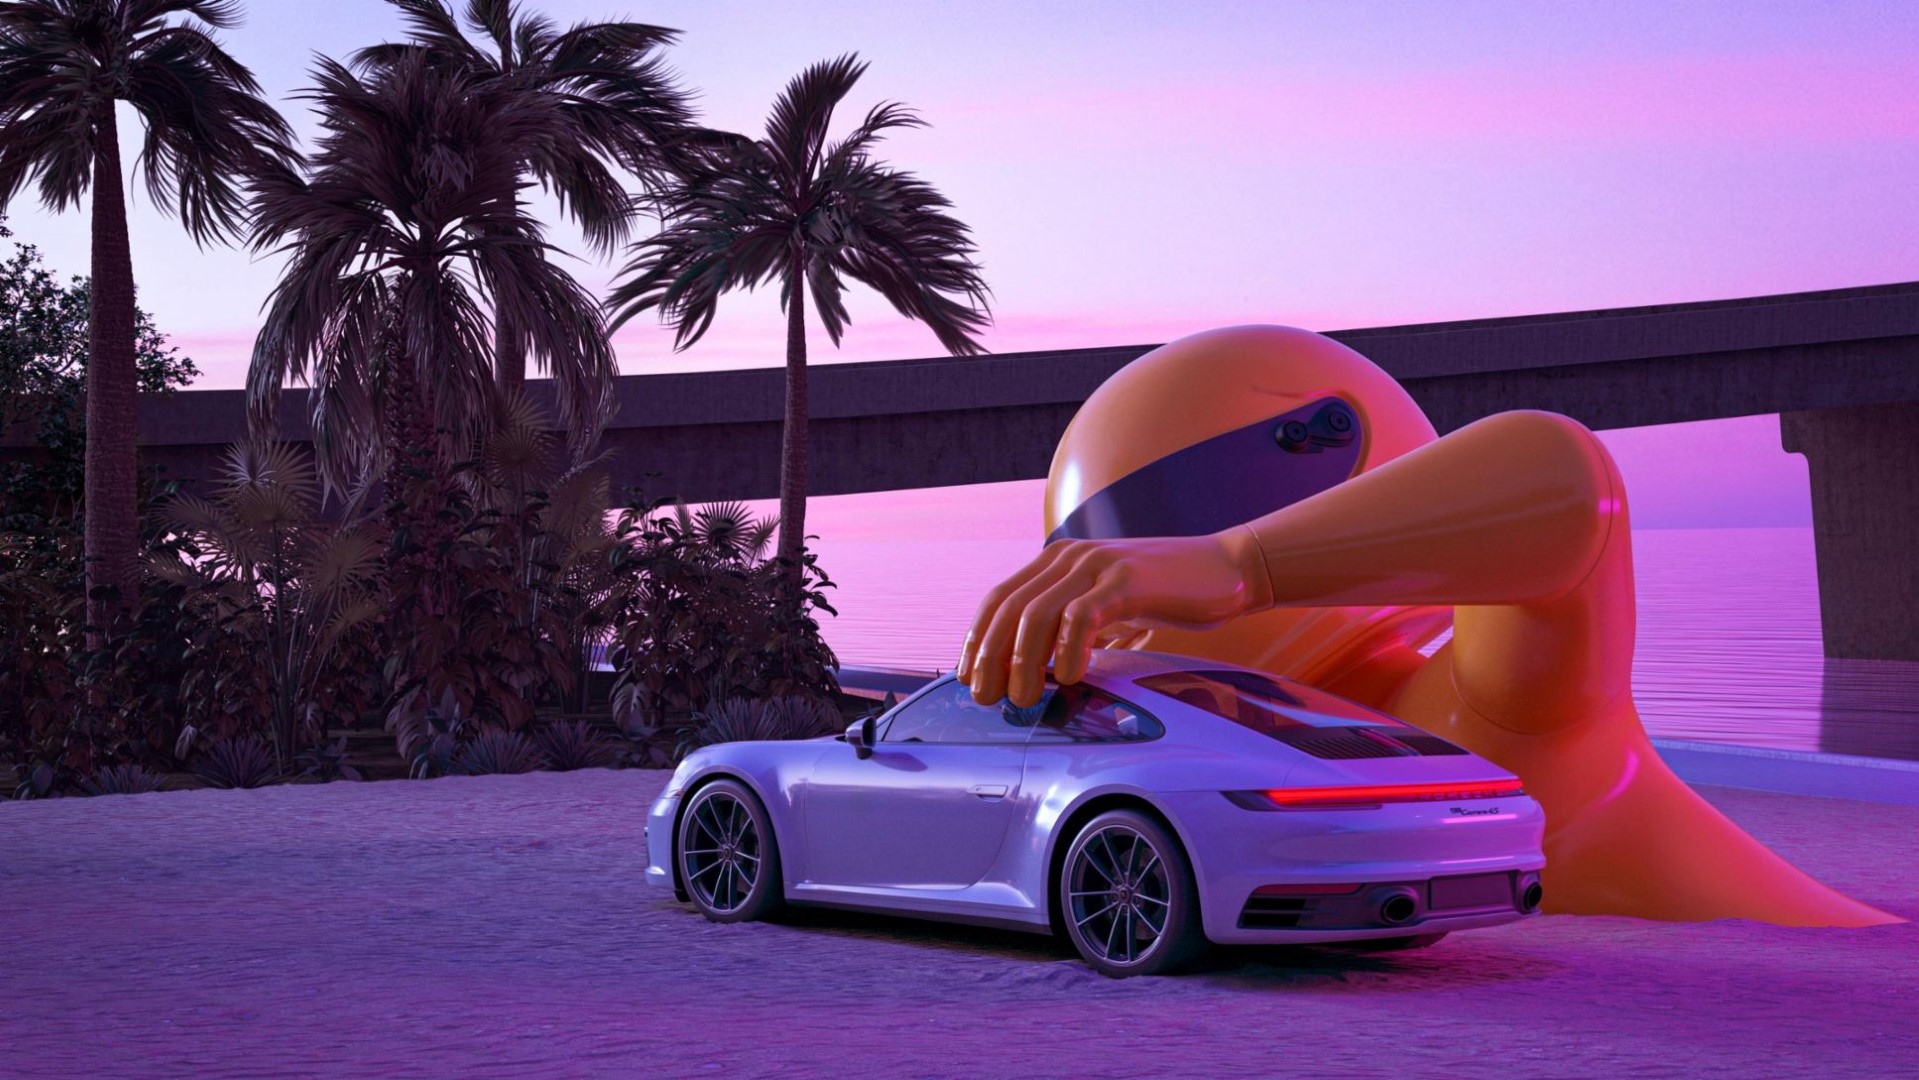 The Art of Dreams: Η Porsche μας καλεί να ονειρευτούμε!